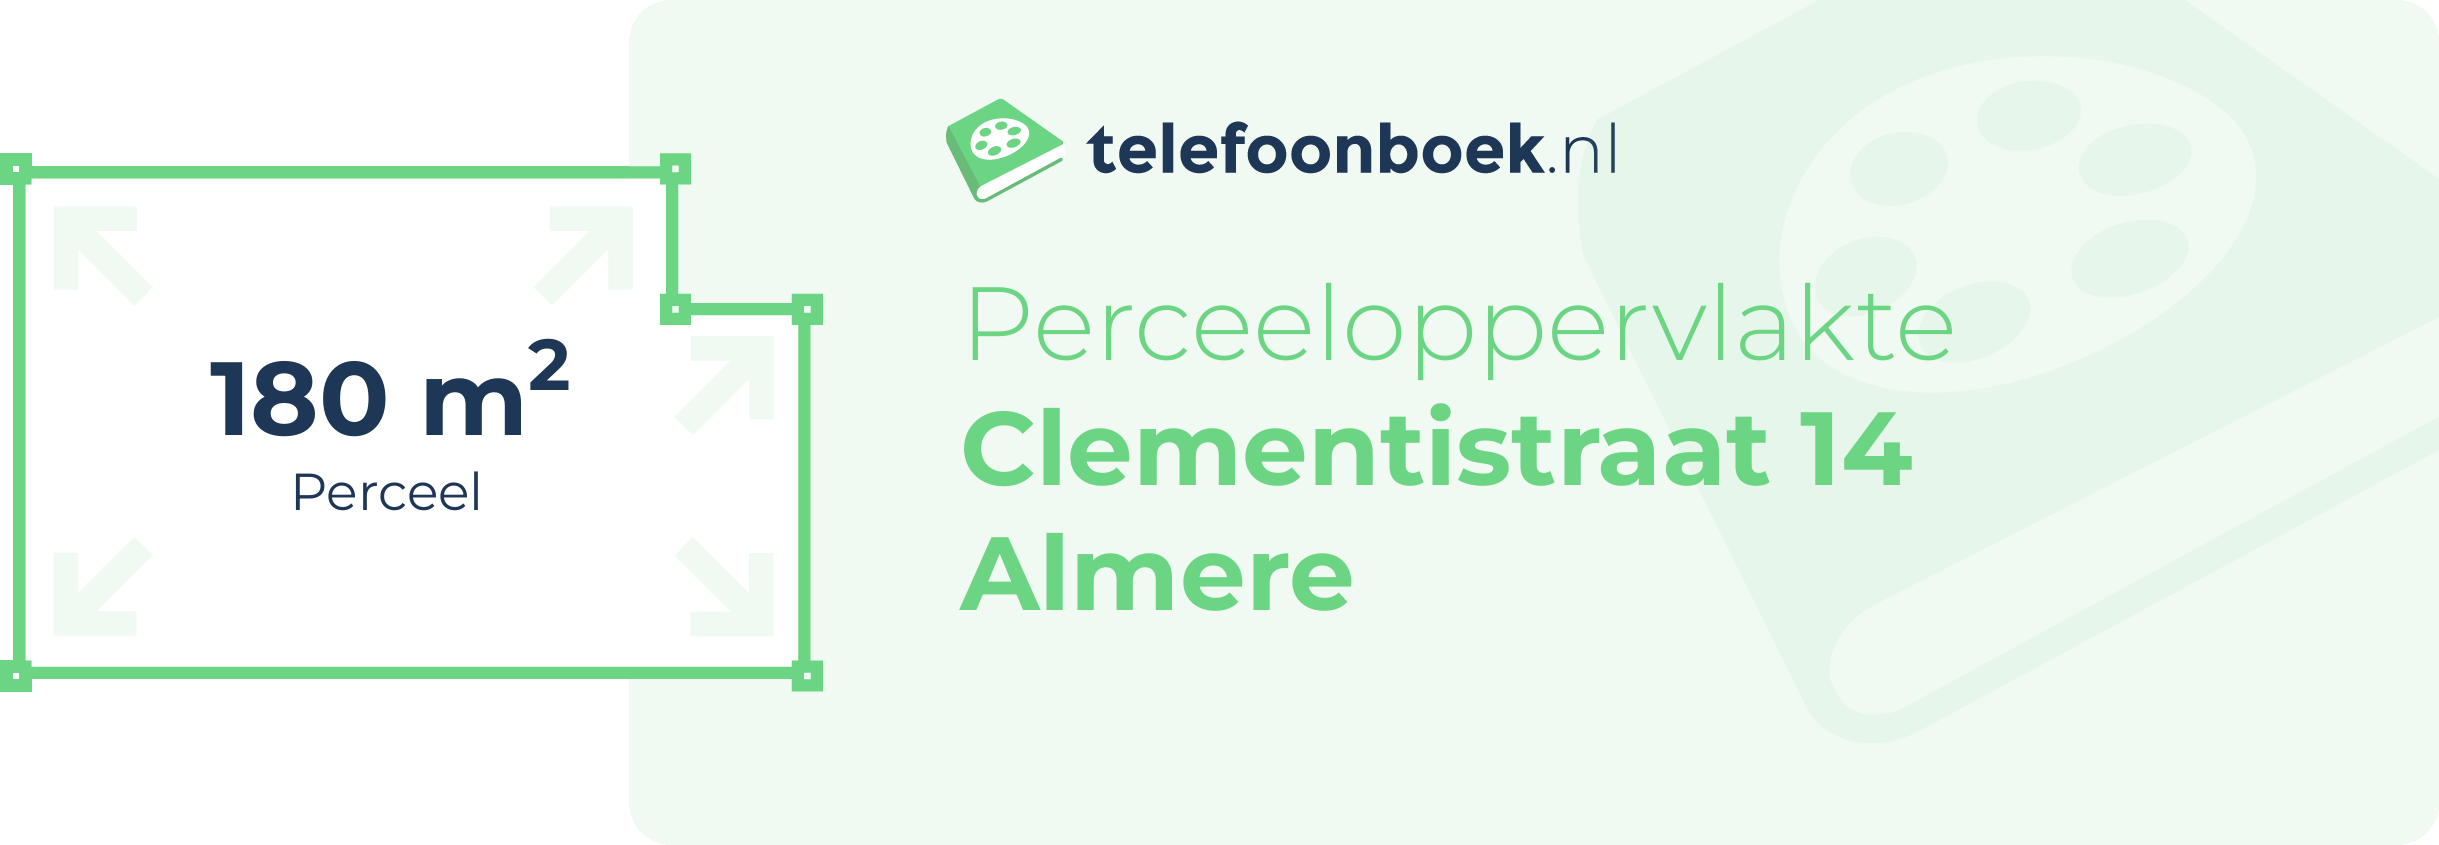 Perceeloppervlakte Clementistraat 14 Almere